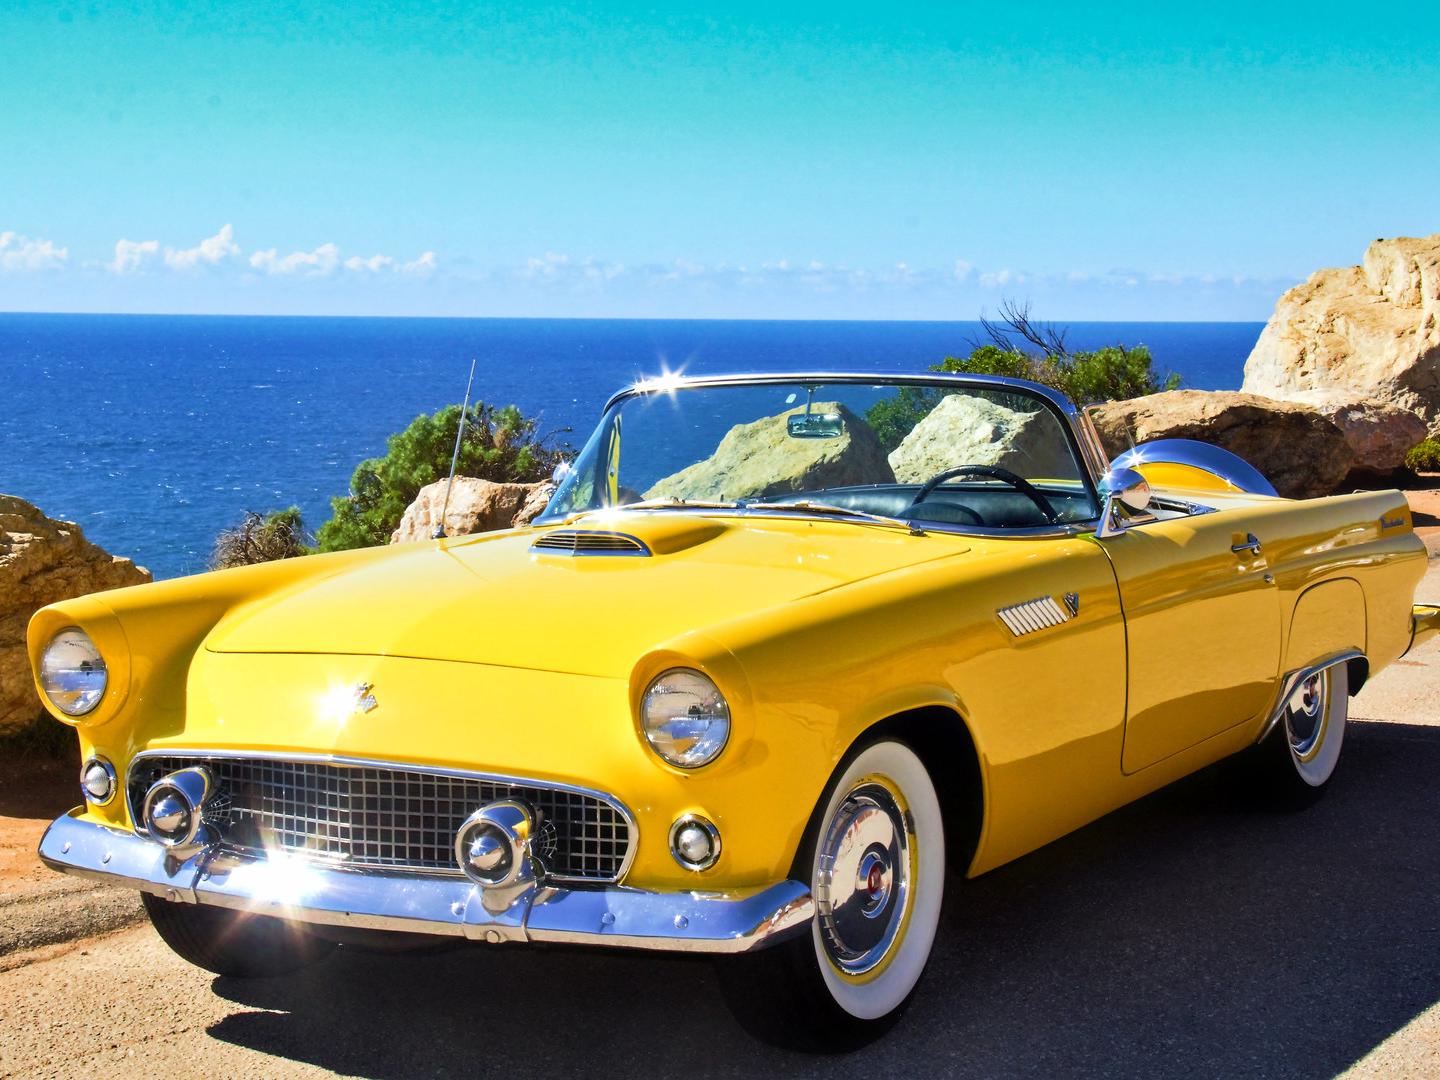 1955 Ford Thunderbird yellow